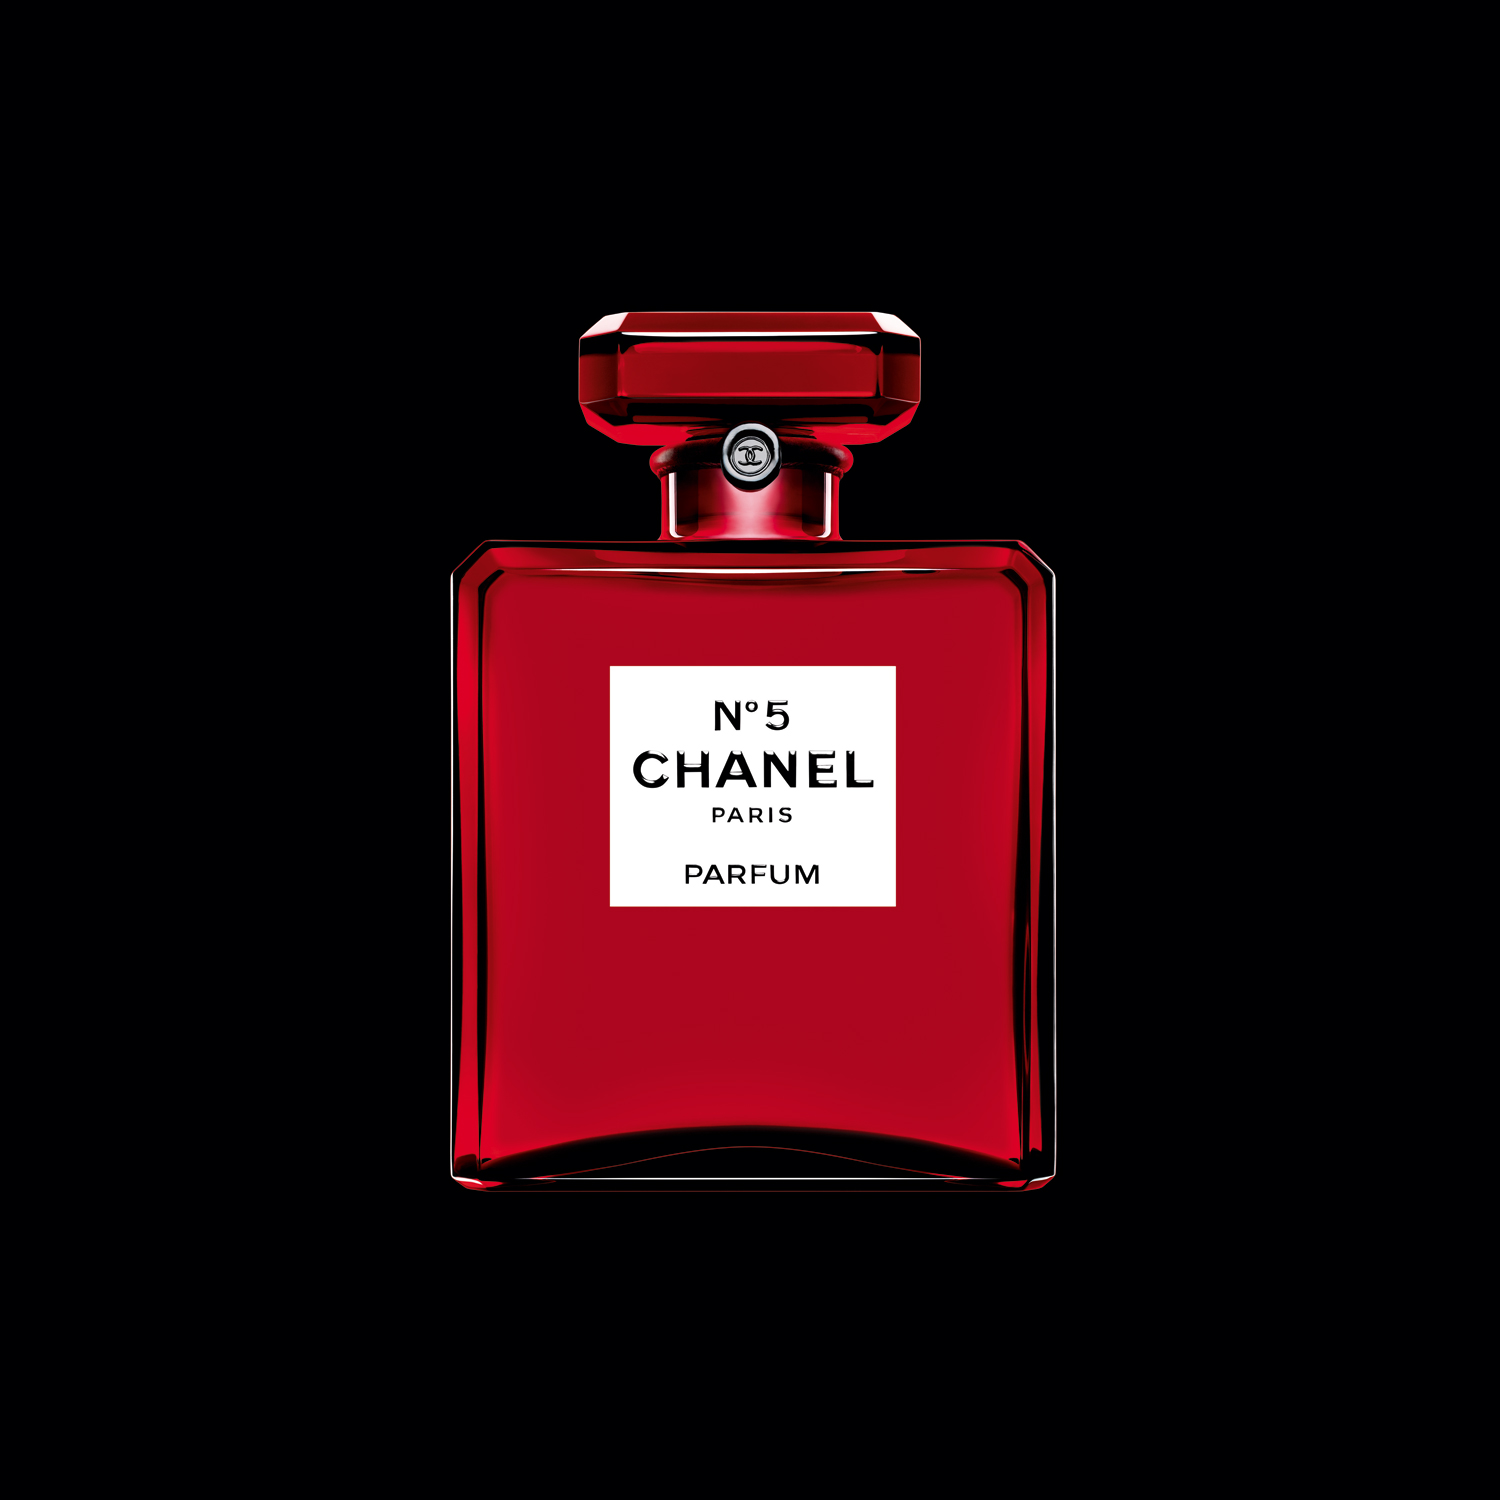 Chanel No 5 Parfum Red Edition Chanel perfume - a novo fragrância